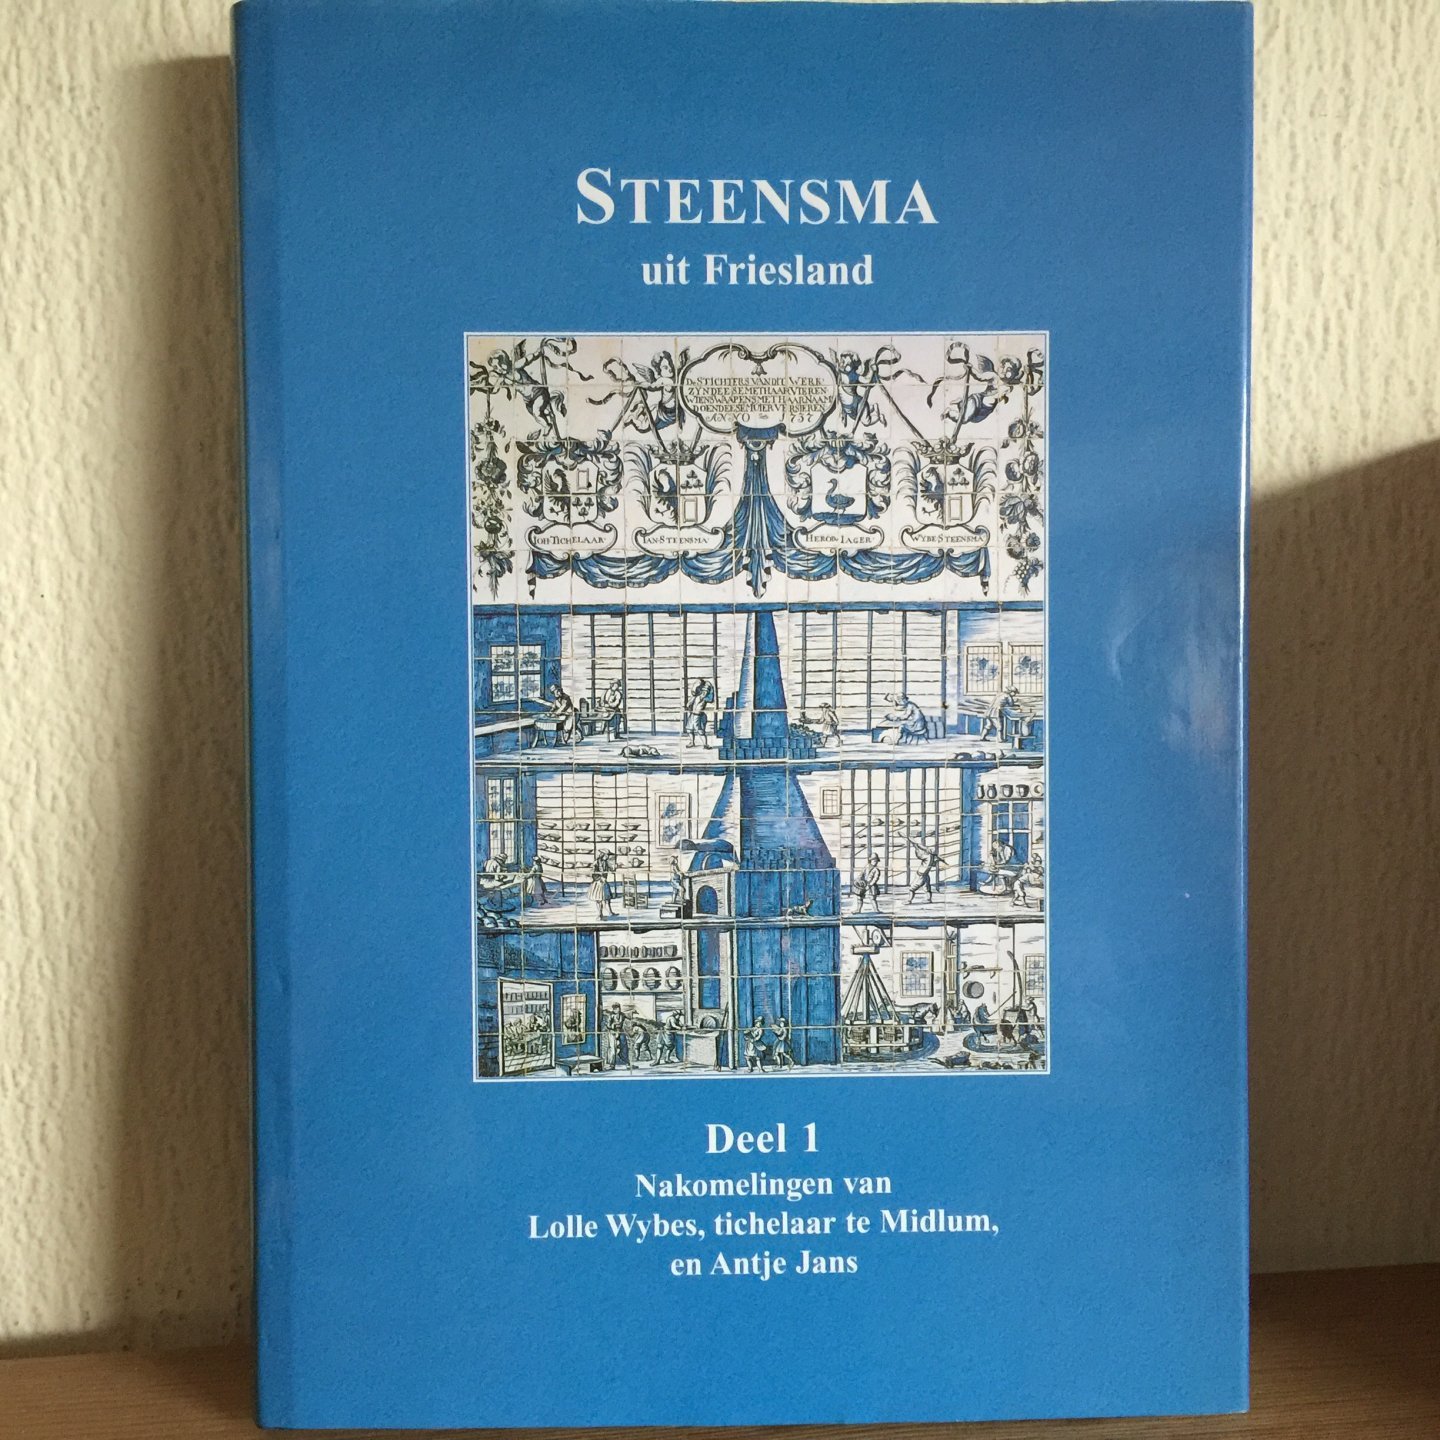 B.D.  MEULEN,VAN DER / STEENSMA,R.J. (samenstellers) - Deel 1. ;Steensma uit Friesland,  Nakomelingen van Lolle Wybes, tichelaar te Midlum en Antje Jans.